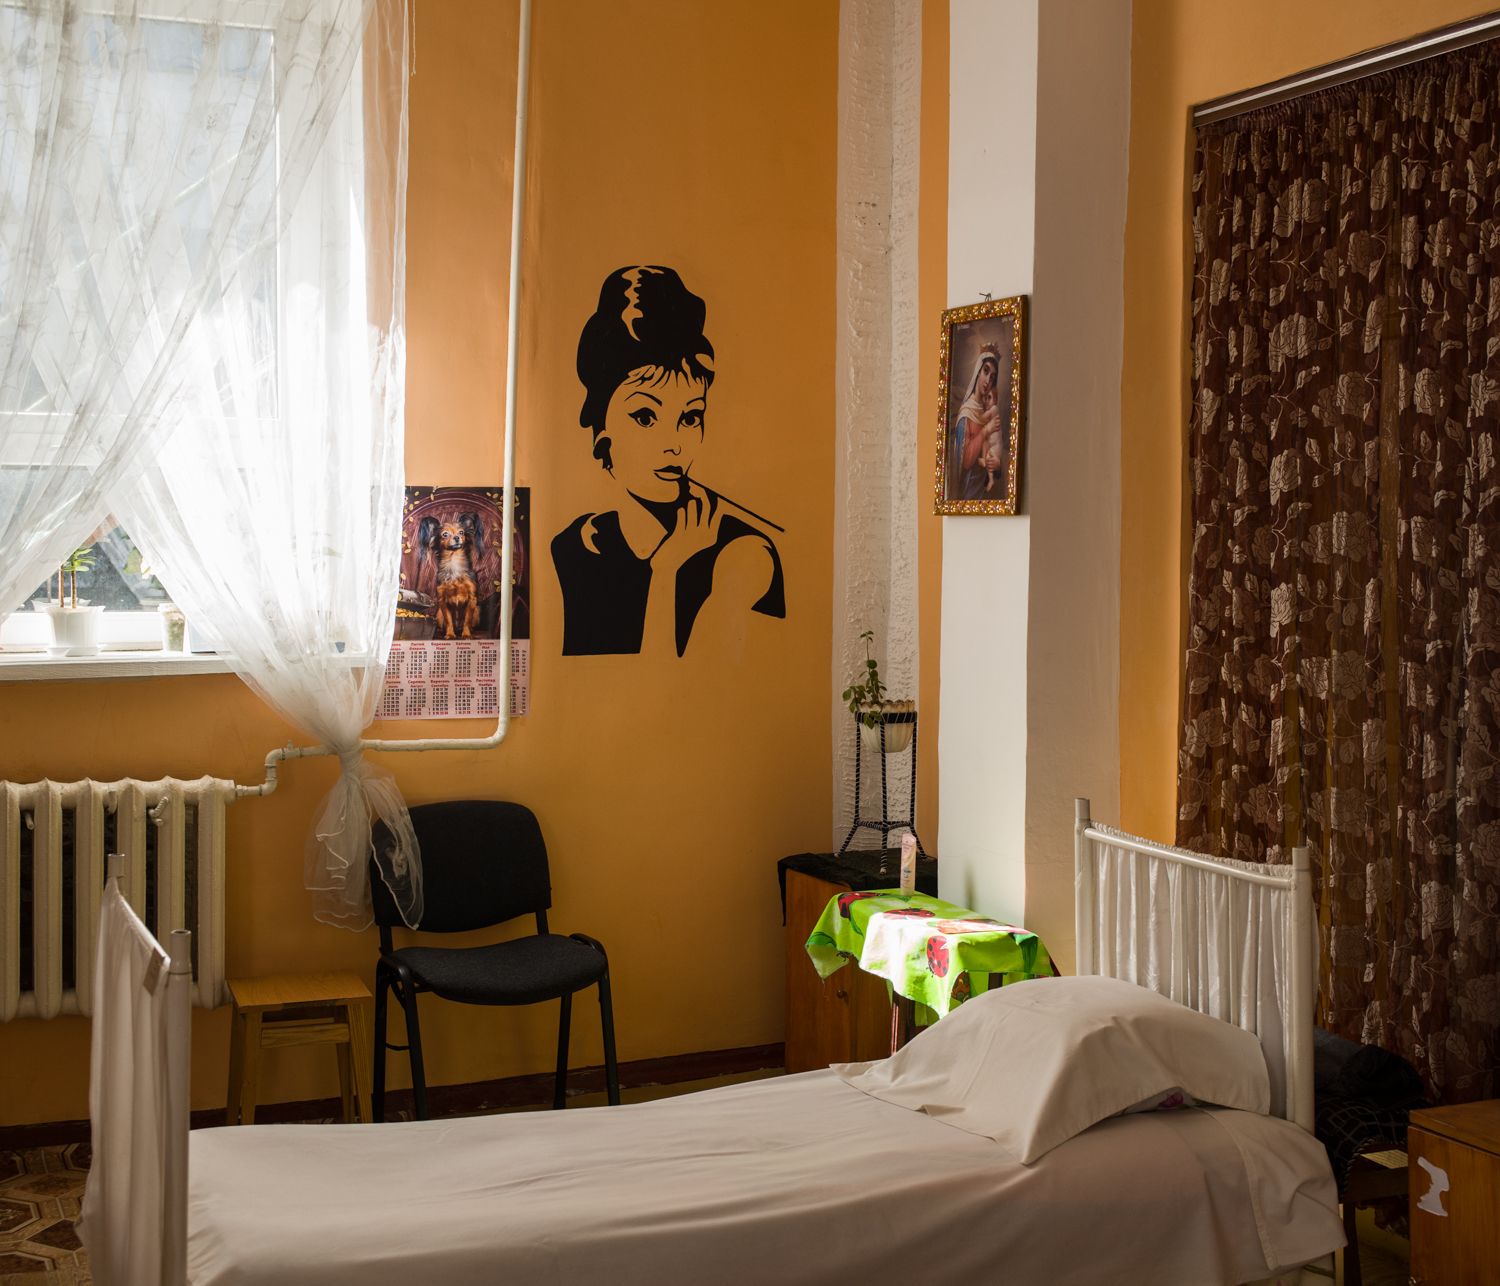 A dormitory room in a women’s prison in Chernigov. Image by Misha Friedman. Ukraine, undated.